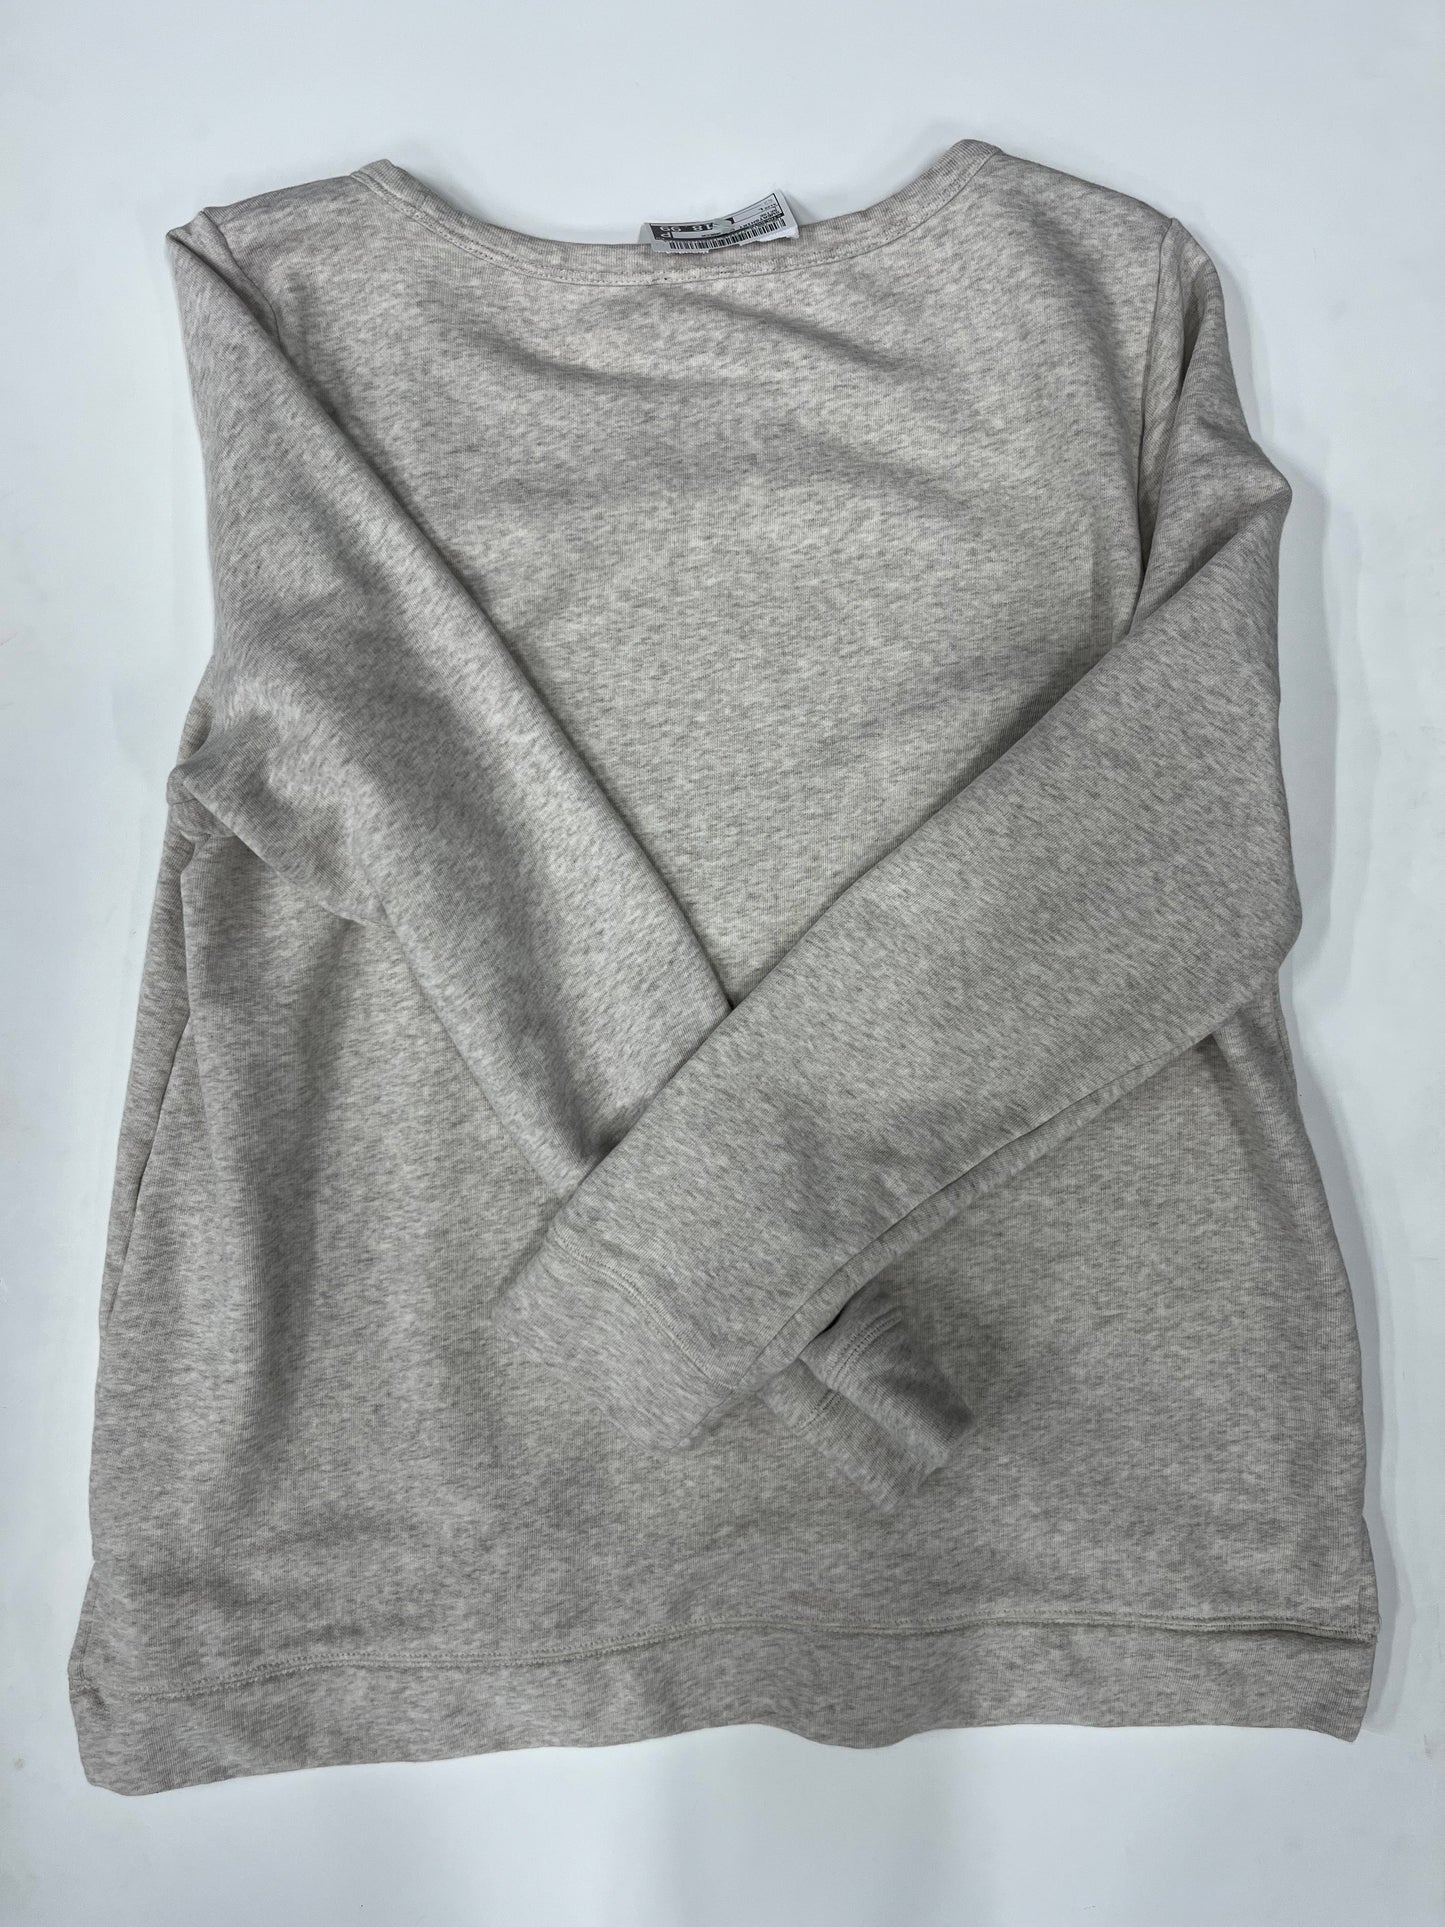 Sweatshirt Crewneck By Talbots  Size: L